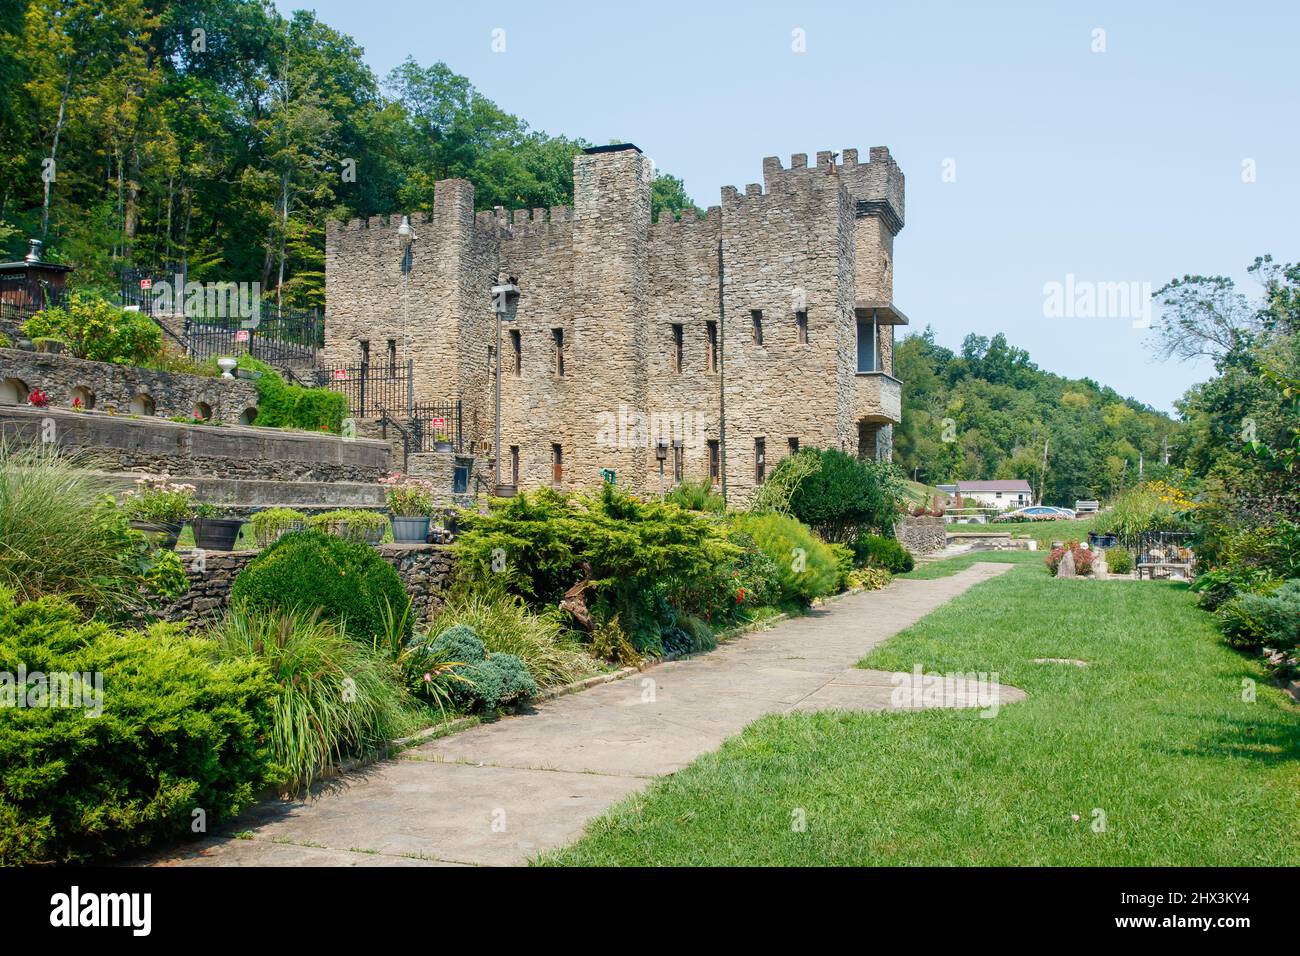 Loveland Castle Chateau Laroche. Medieval style castle built by Harry D Andrews. Loveland, Cincinnati, Ohio, USA. Stock Photo